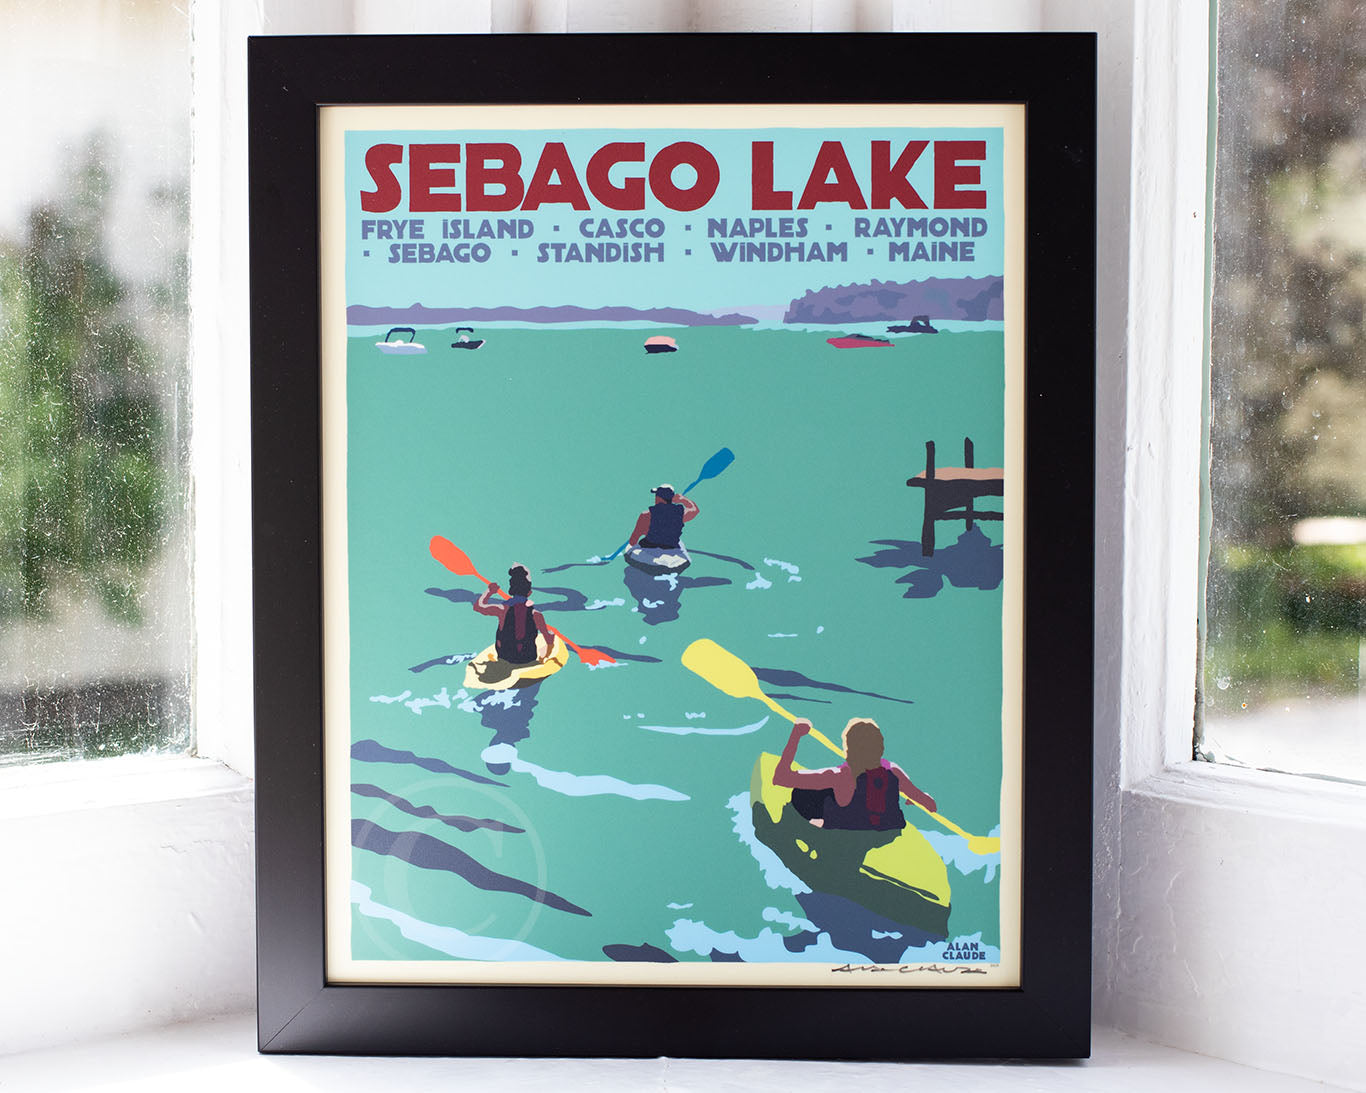 Sebago Lake kayakers Art Print 8" x 10" Framed Travel Poster By Alan Claude - Maine